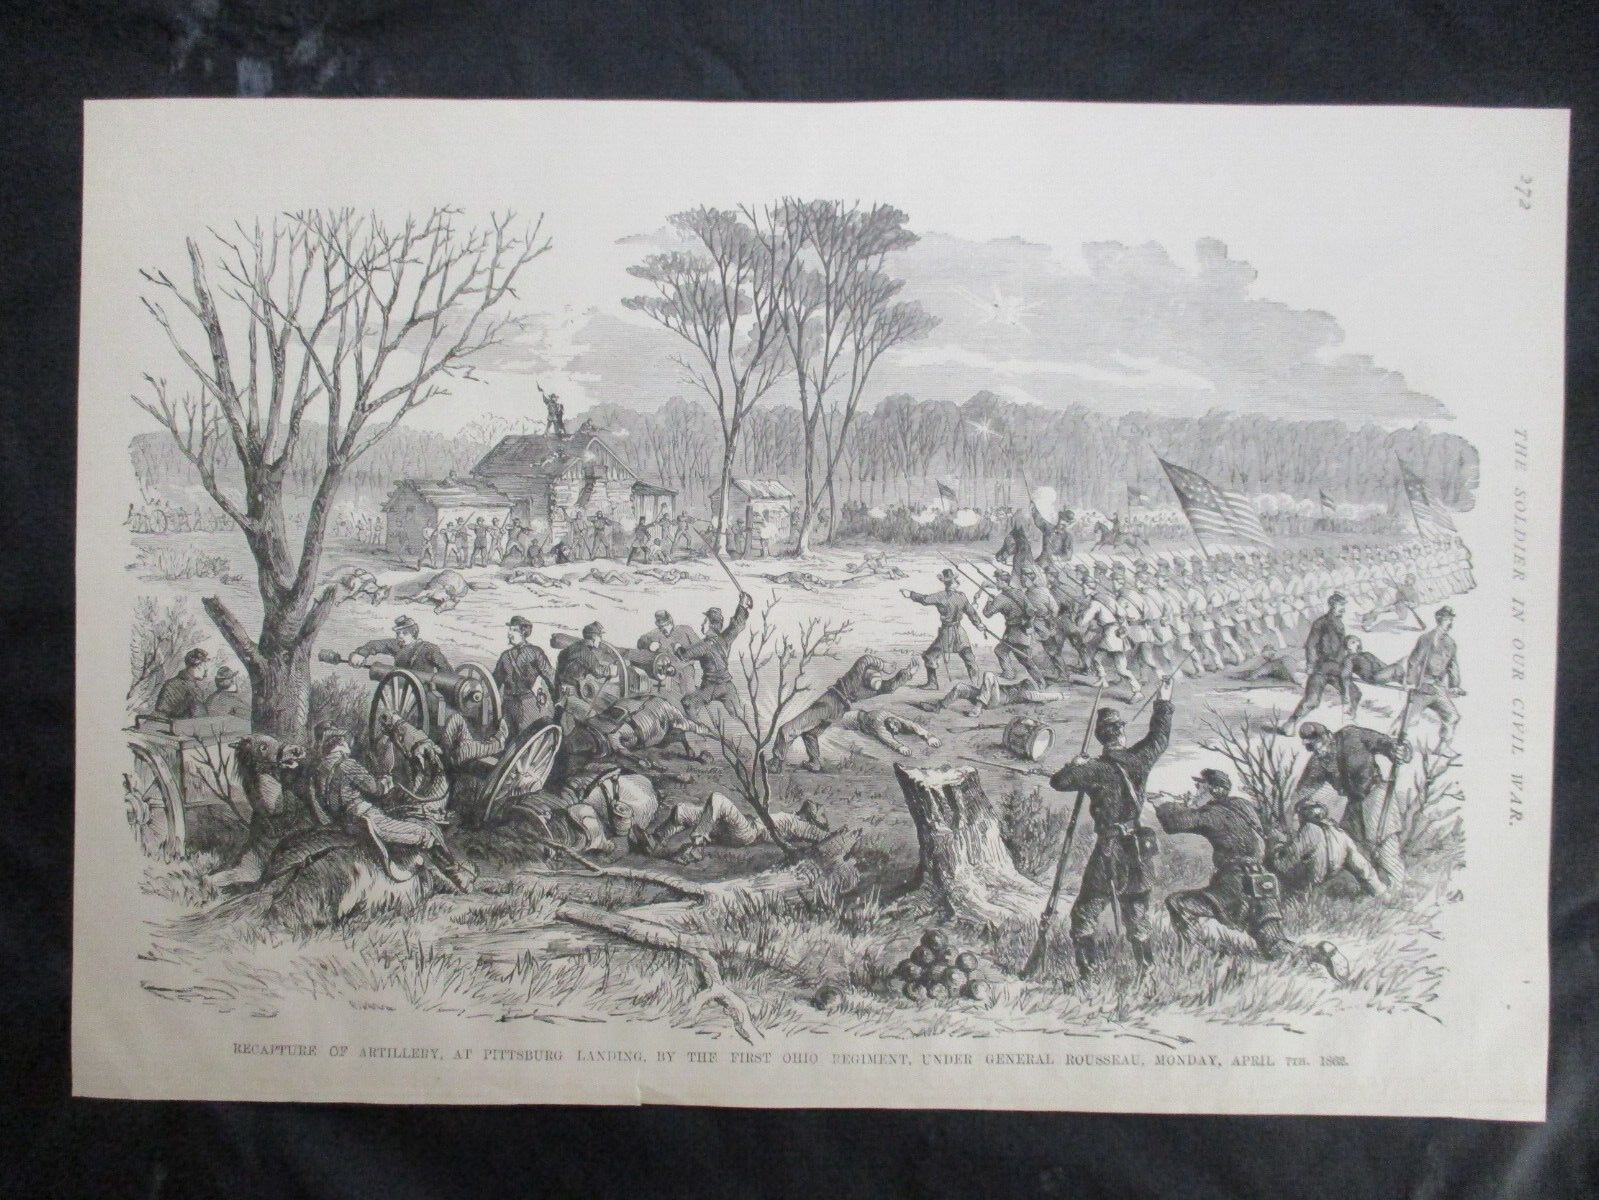 1884 Civil War Print- Battle of Shiloh, Tennessee, 1862, Recapture of Artillery